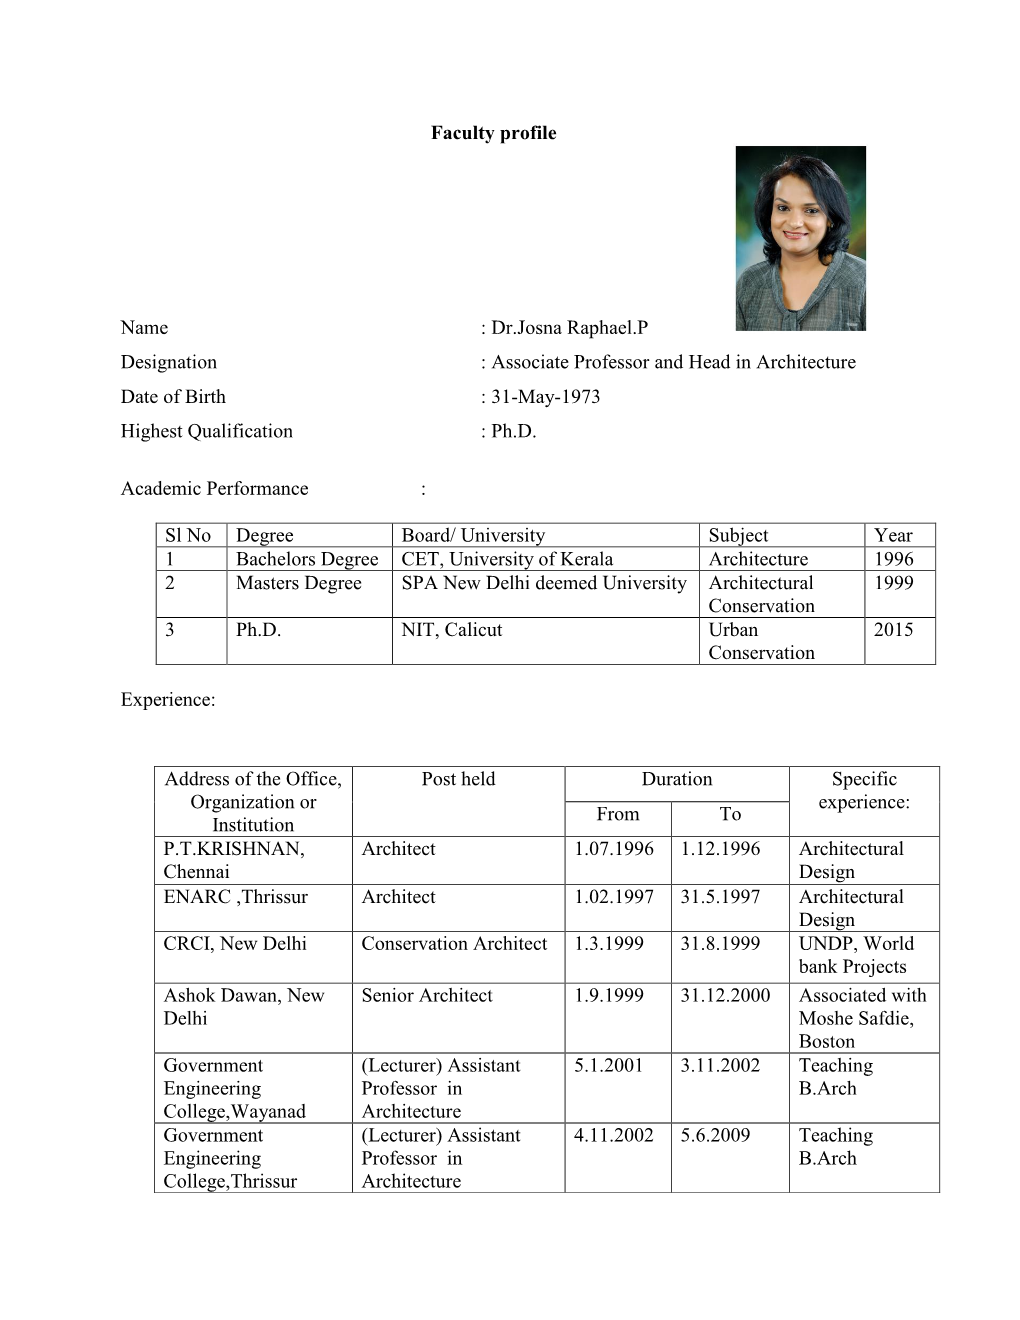 Faculty Profile Name : Dr.Josna Raphael.P Designation : Associate Professor and Head in Architecture Date of Birth